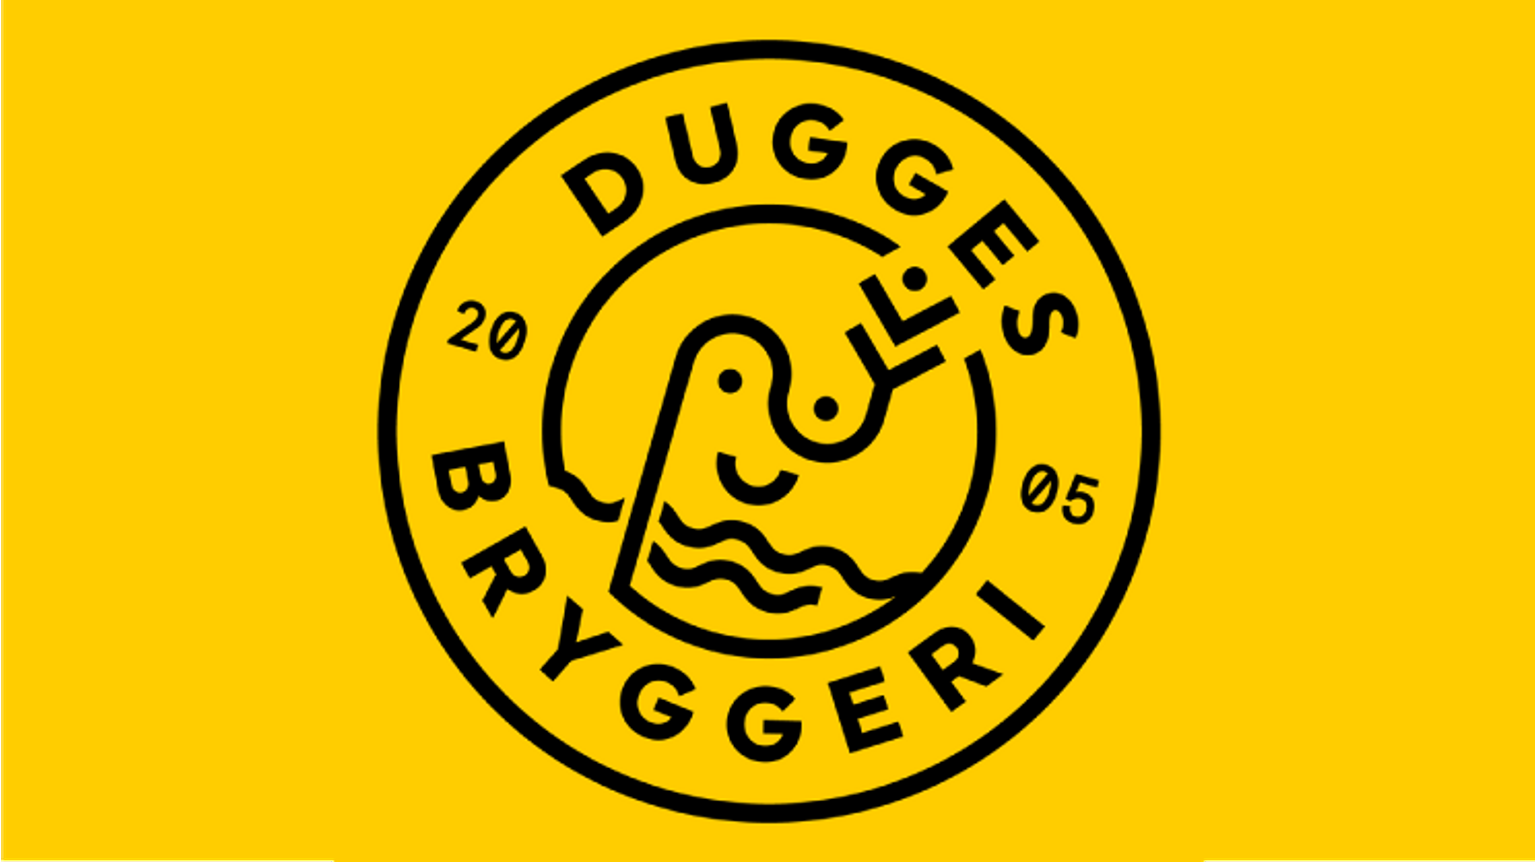 thumbnail for blog article named: Dugges, la brasserie artisanale suédoise